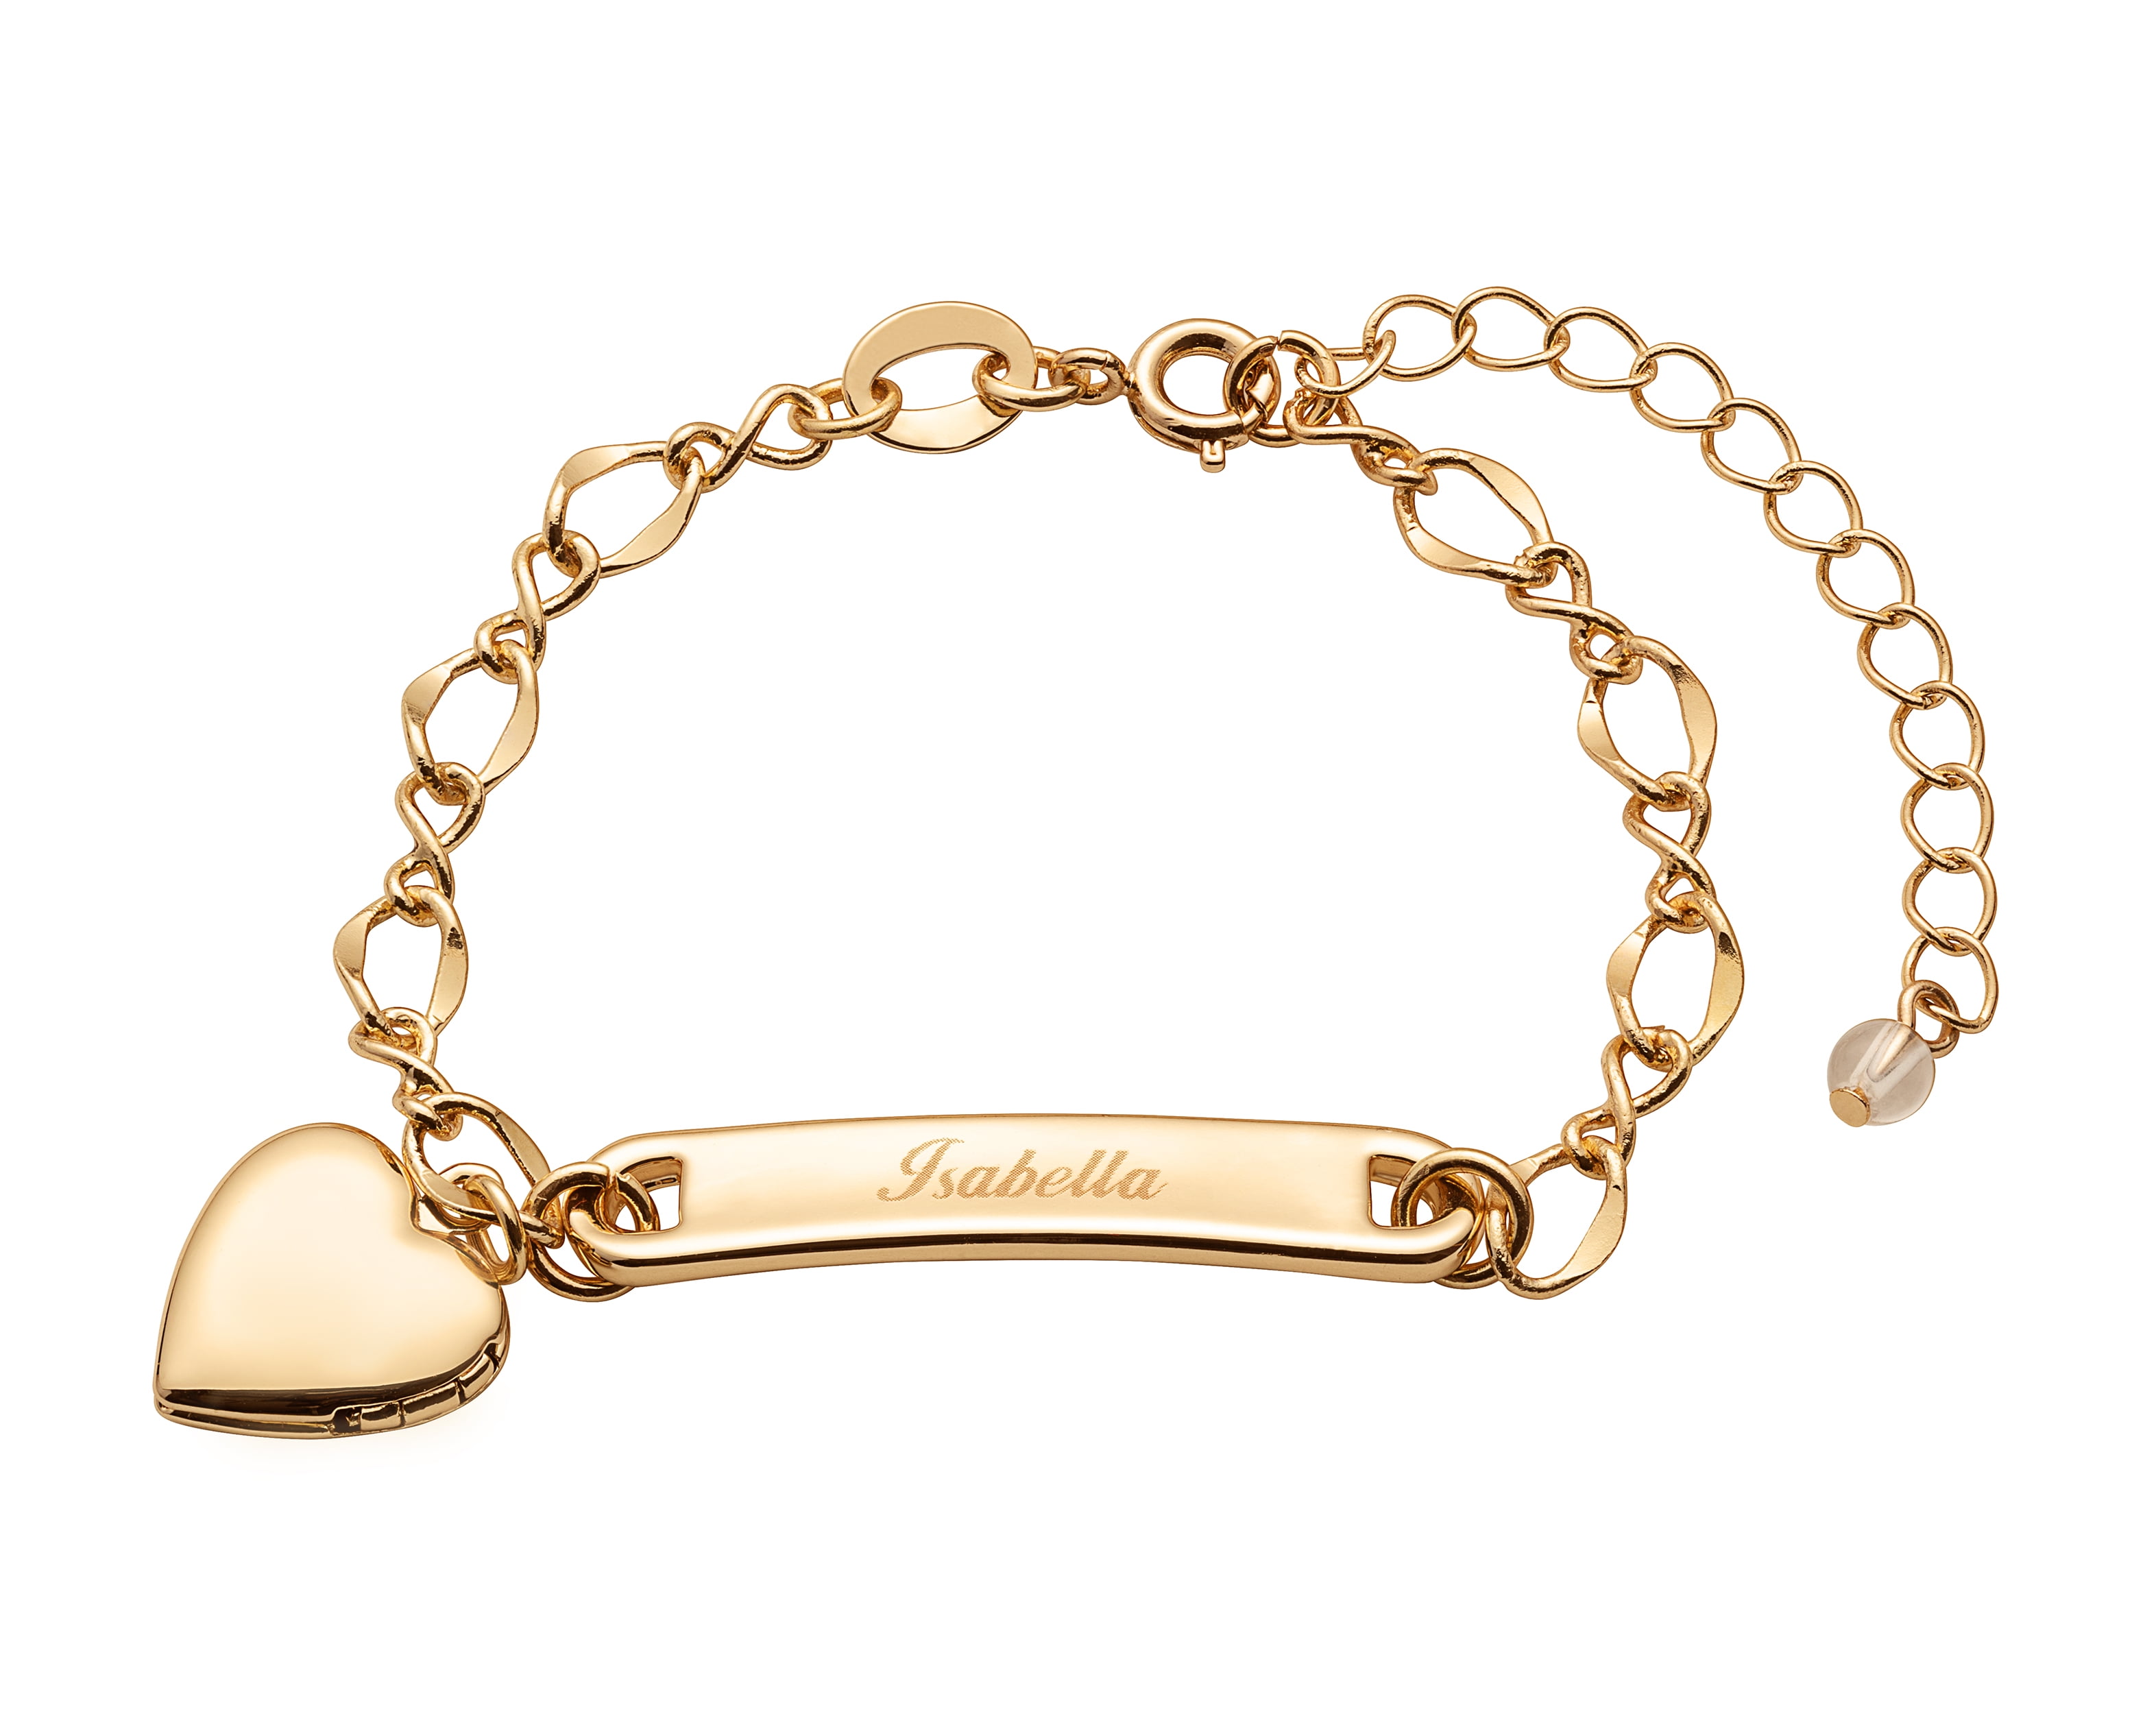 Bracelet with Gold Plating and Swarovski crystals - Gift for Girl Friend -  Casual Bracelet - Felicia Bracelet by Blingvine